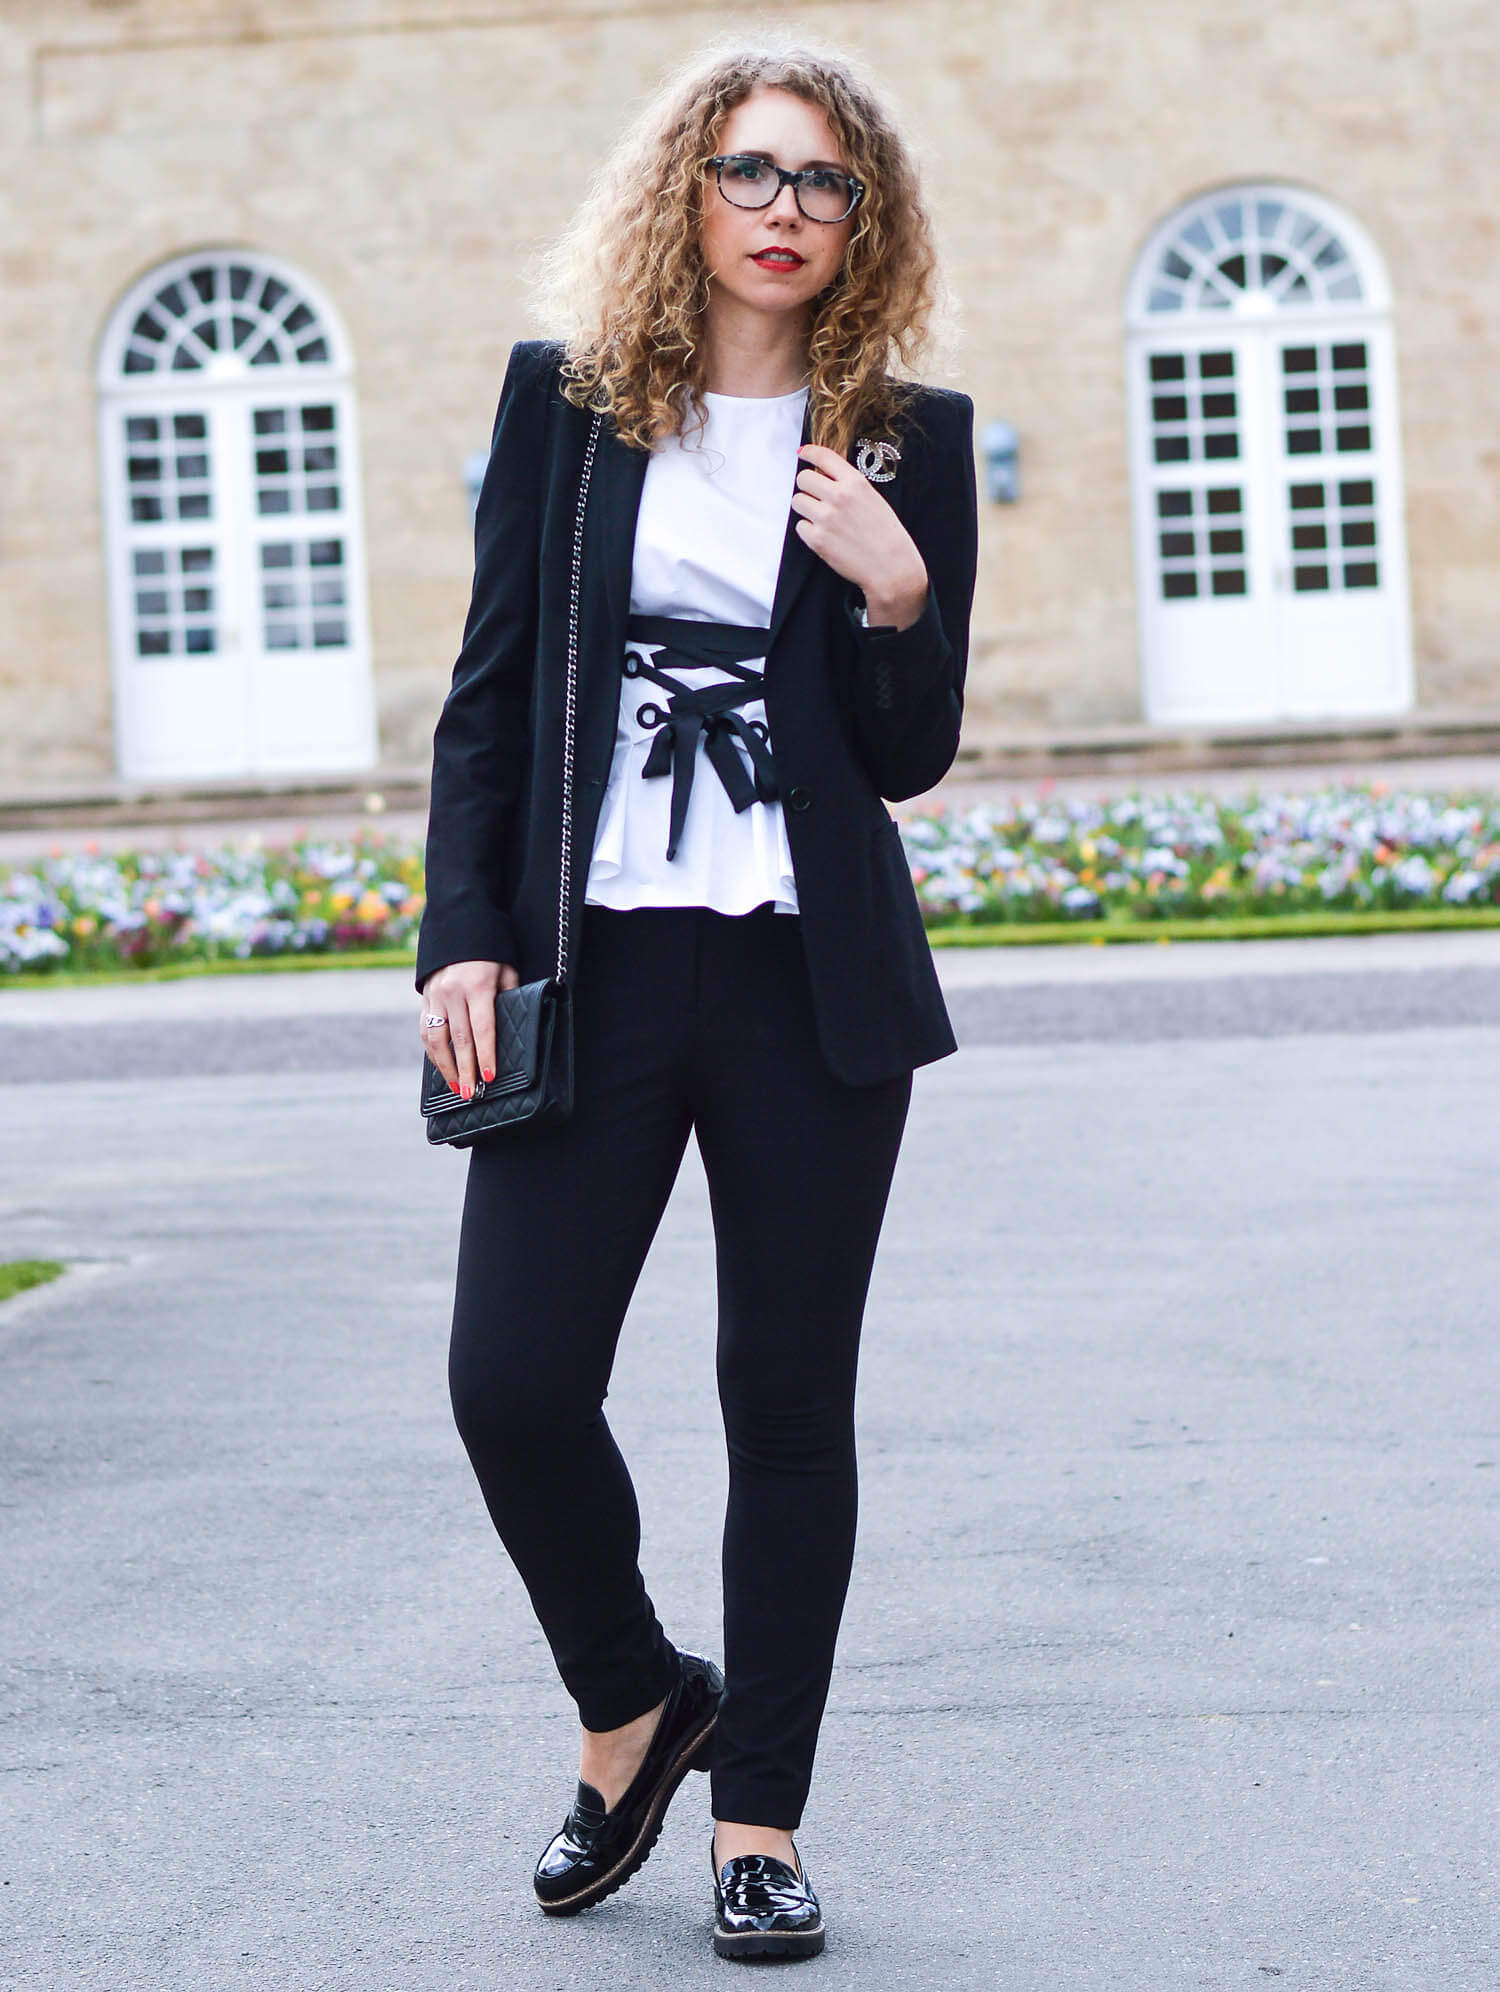 kationette-fashionlog-nrw-Outfit-Black-White-Zara-Lacing-Top-Blazer-Slim-Pants-Chanel-Bag